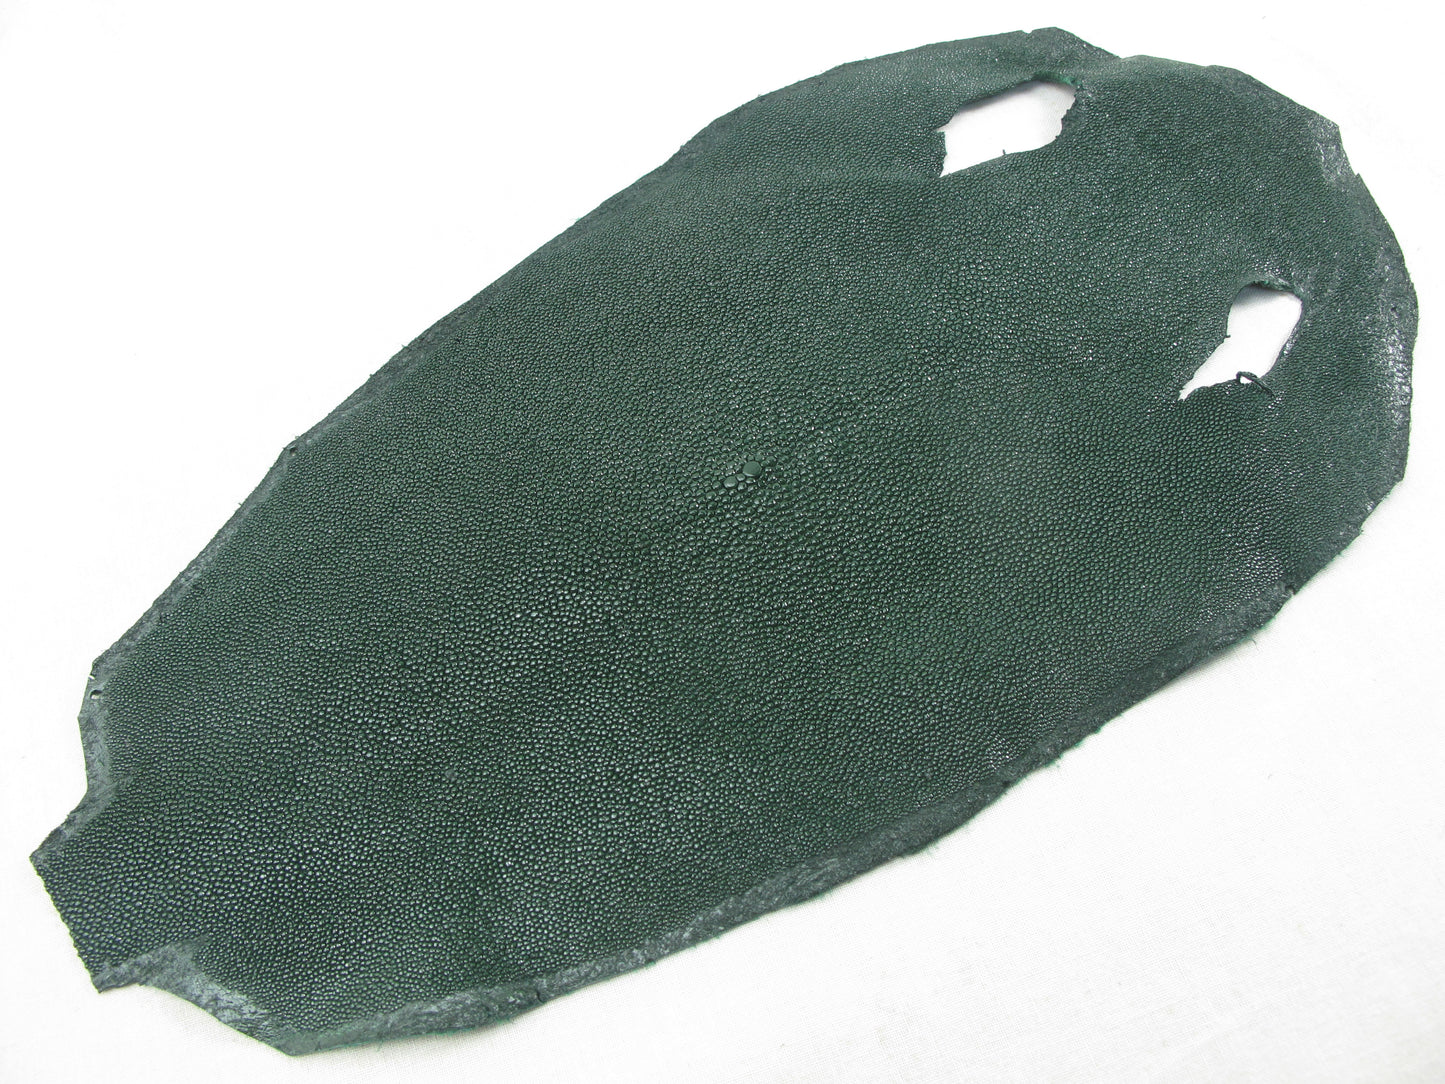 Genuine Stingray Skin Leather Round Shape Hide Pelt Fir Green